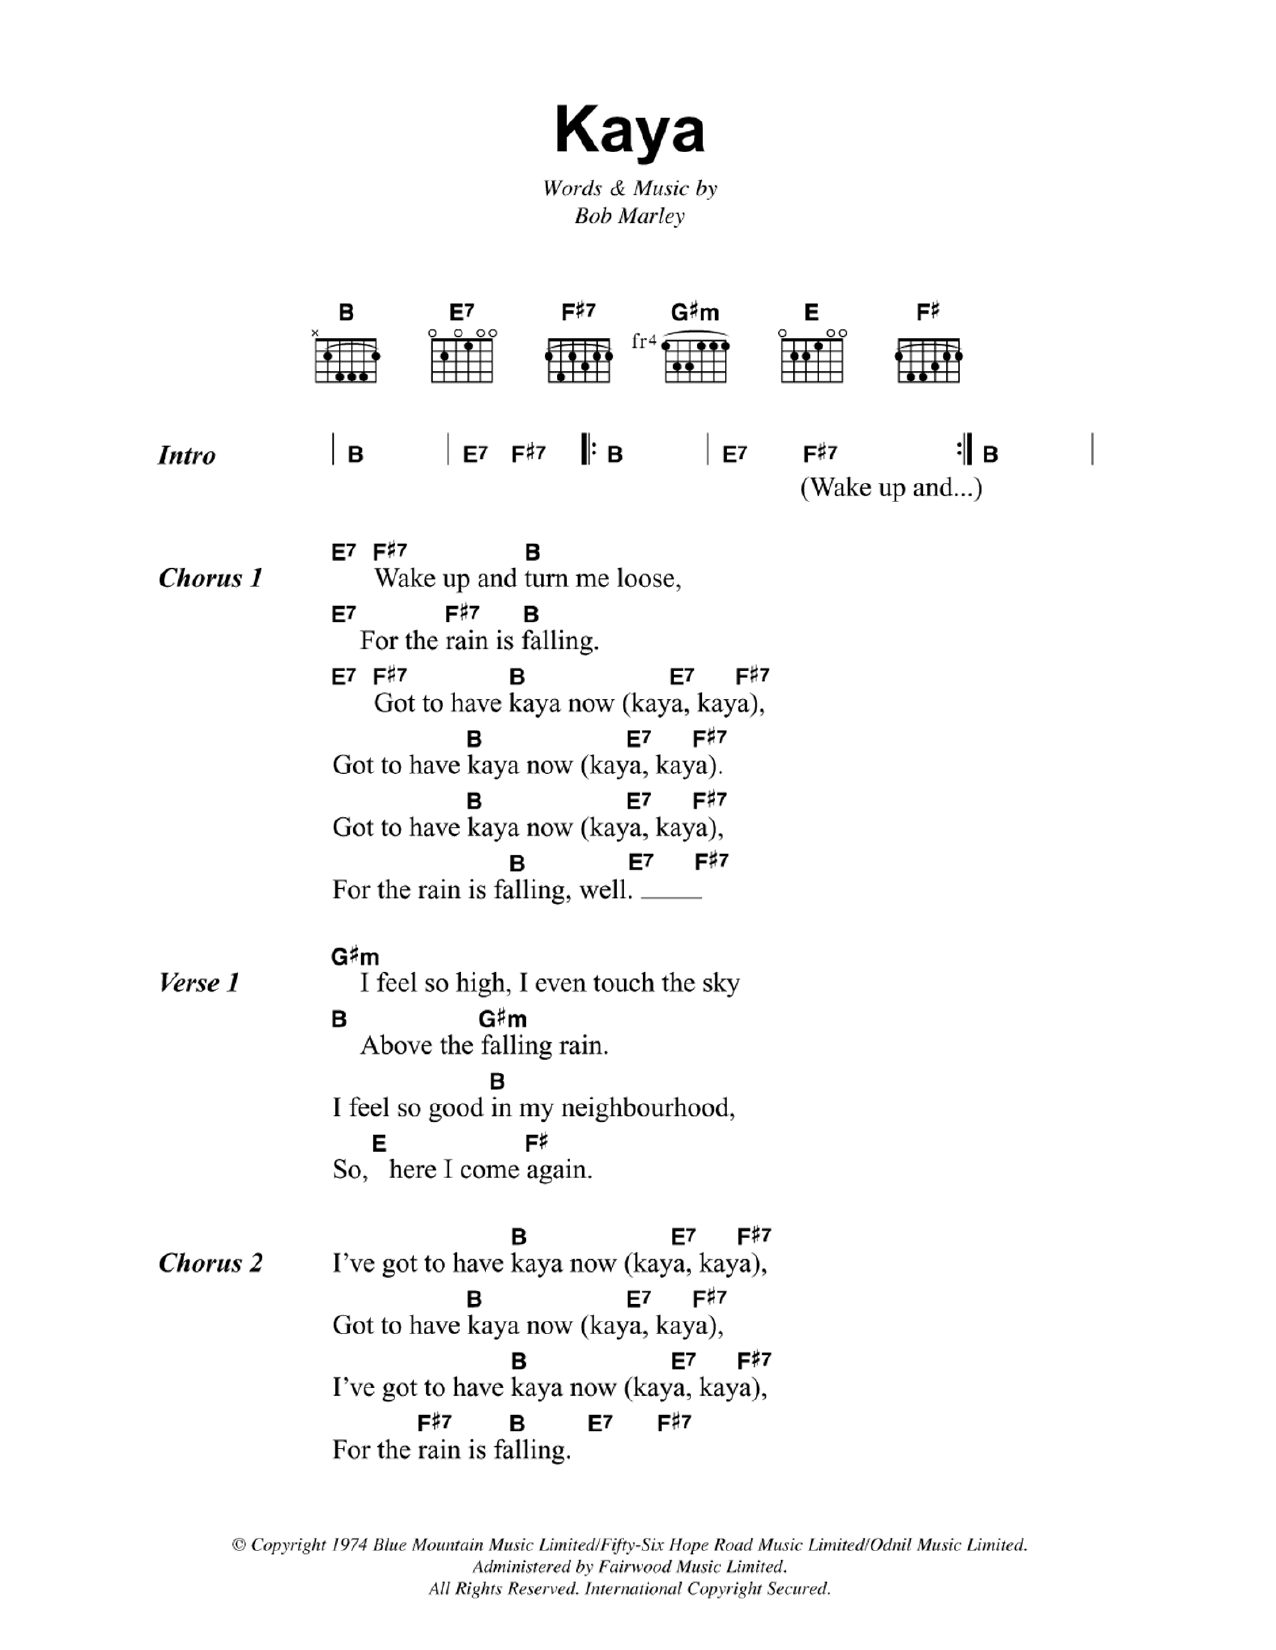 Download Bob Marley Kaya Sheet Music and learn how to play Lyrics & Chords PDF digital score in minutes